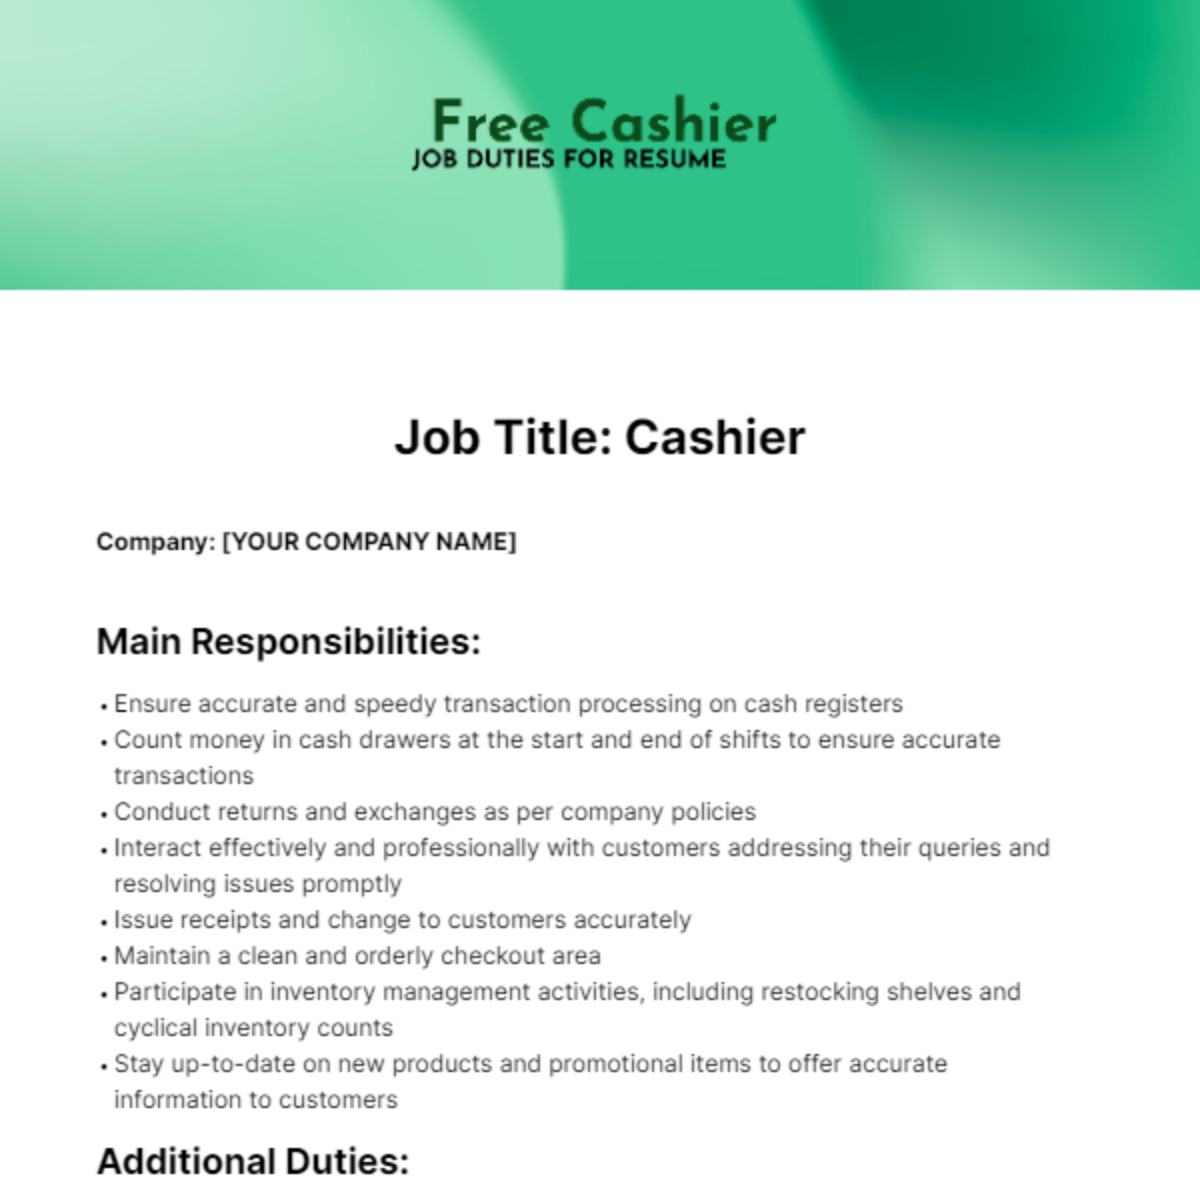 Cashier Job Duties for Resume Template